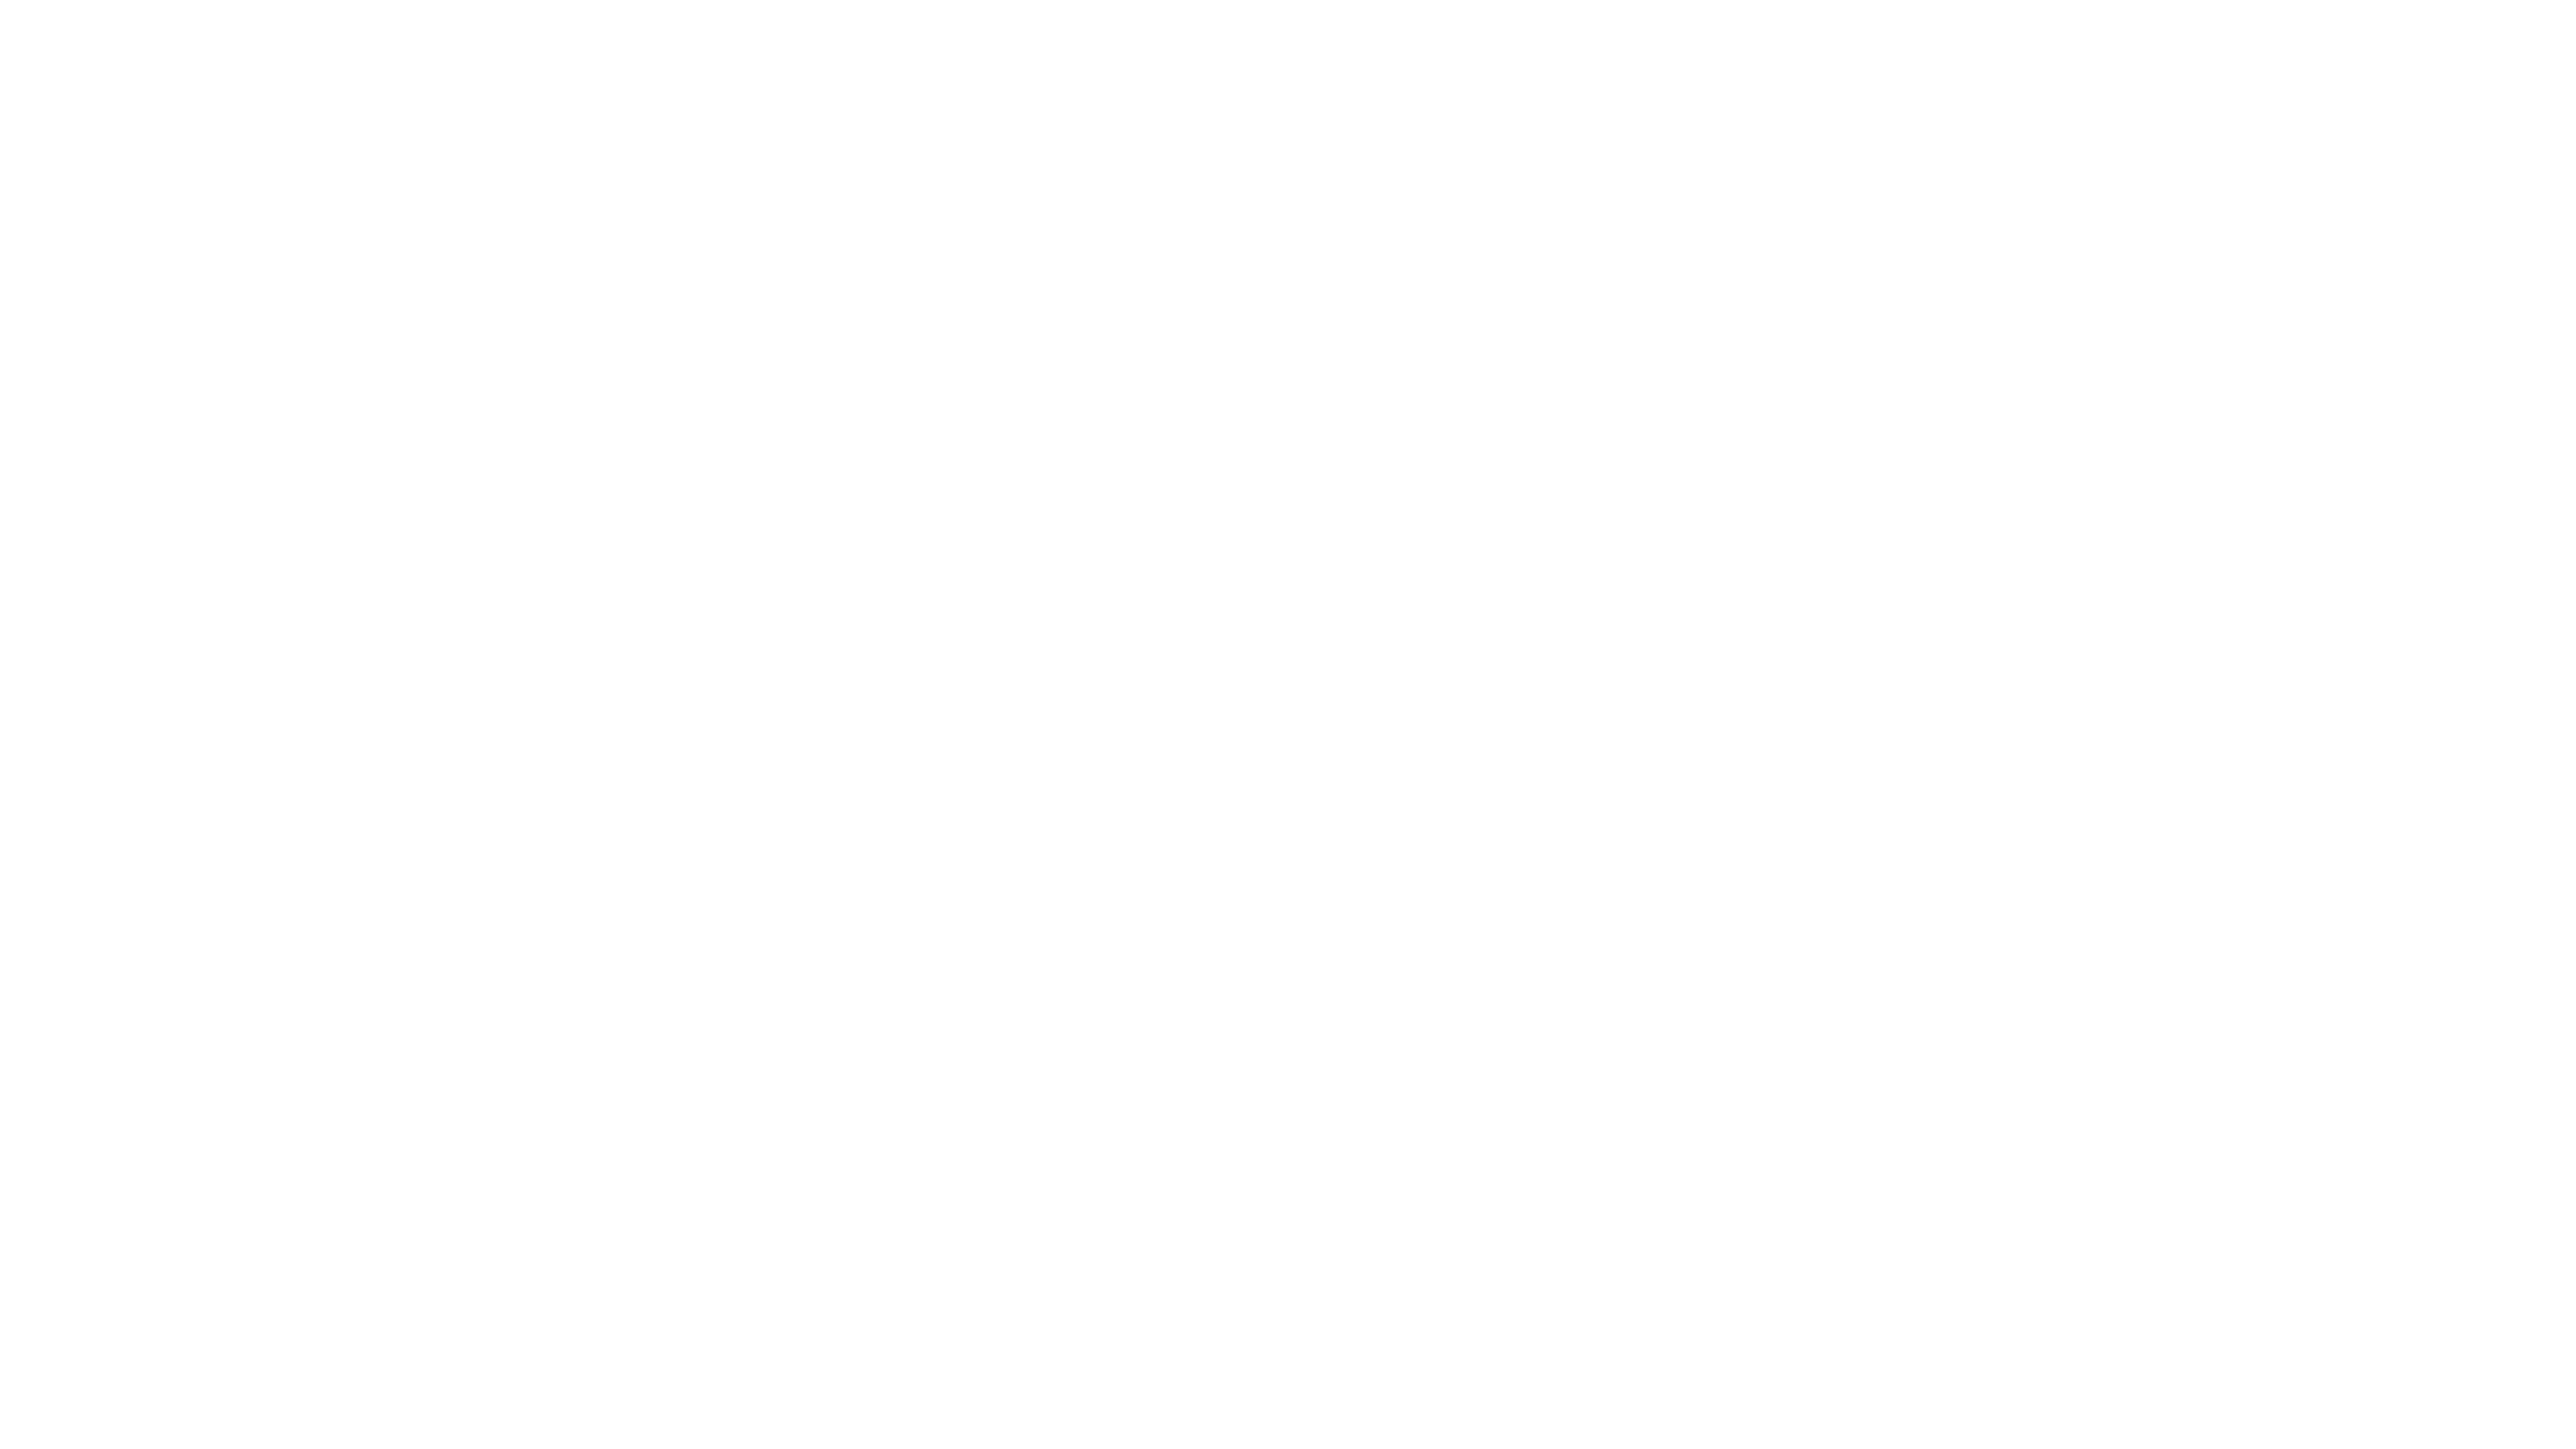 streamline